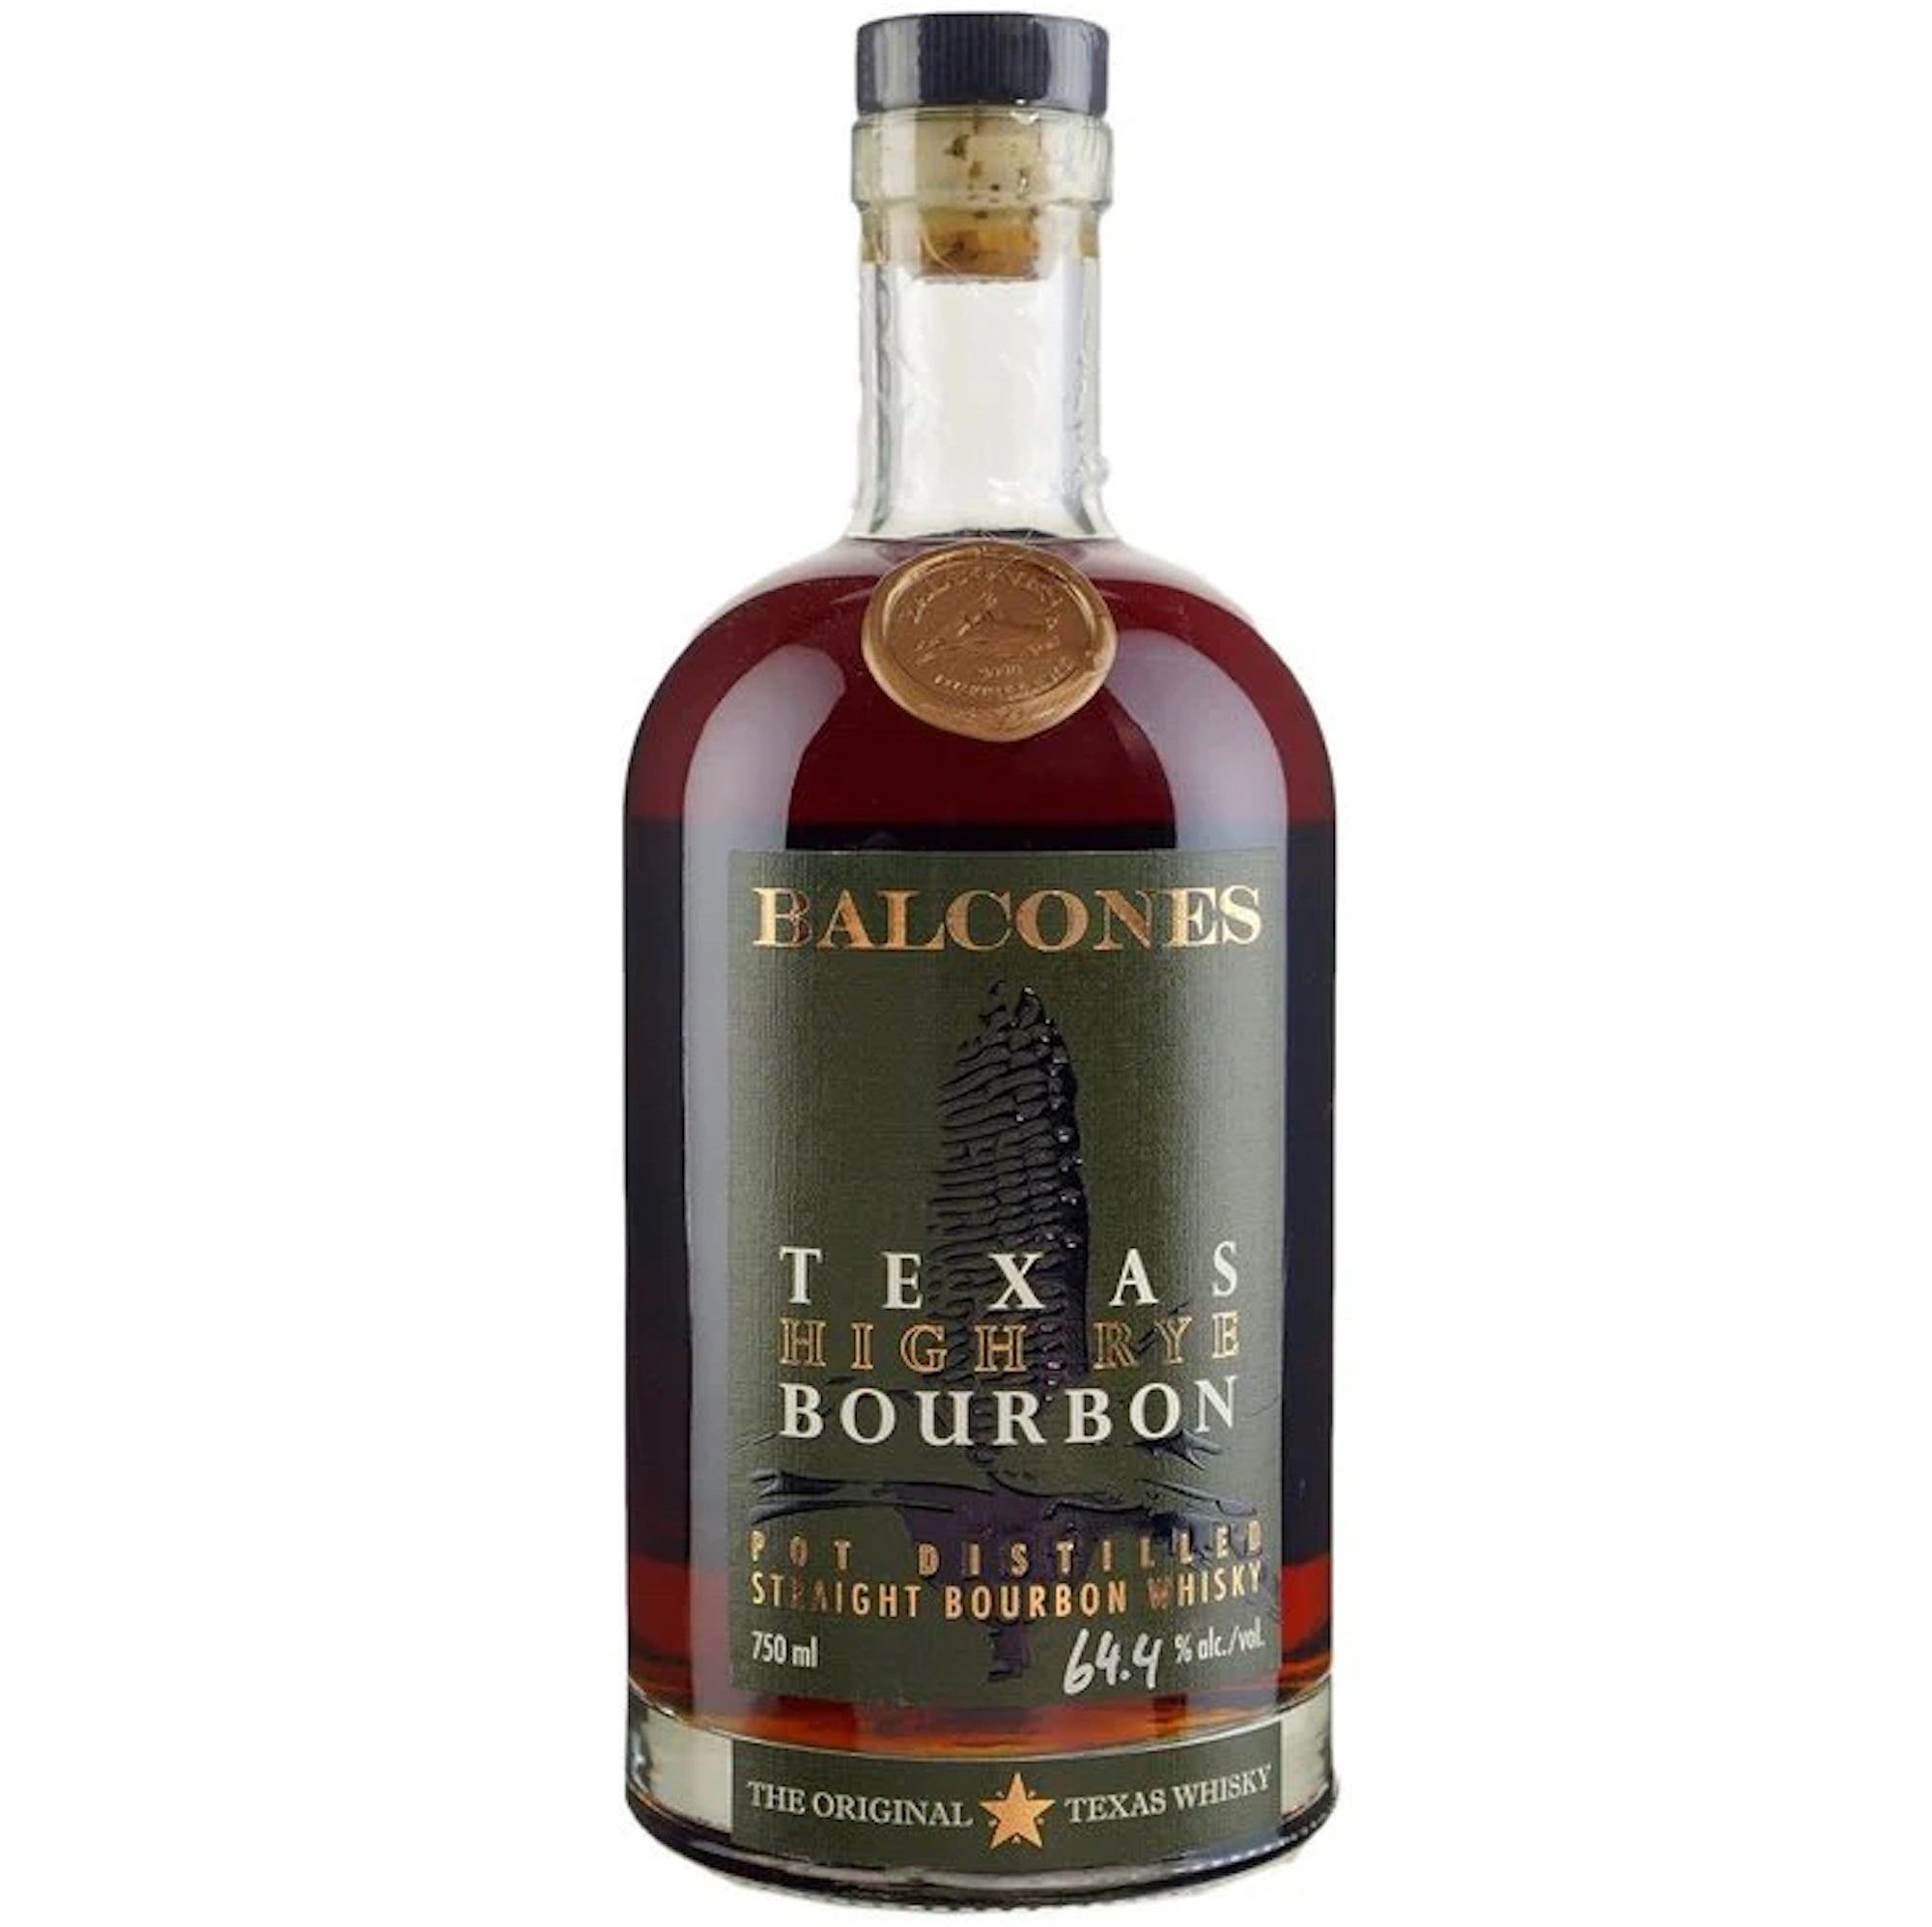 Balcones Texas High Rye Bourbon (Limited Edition)